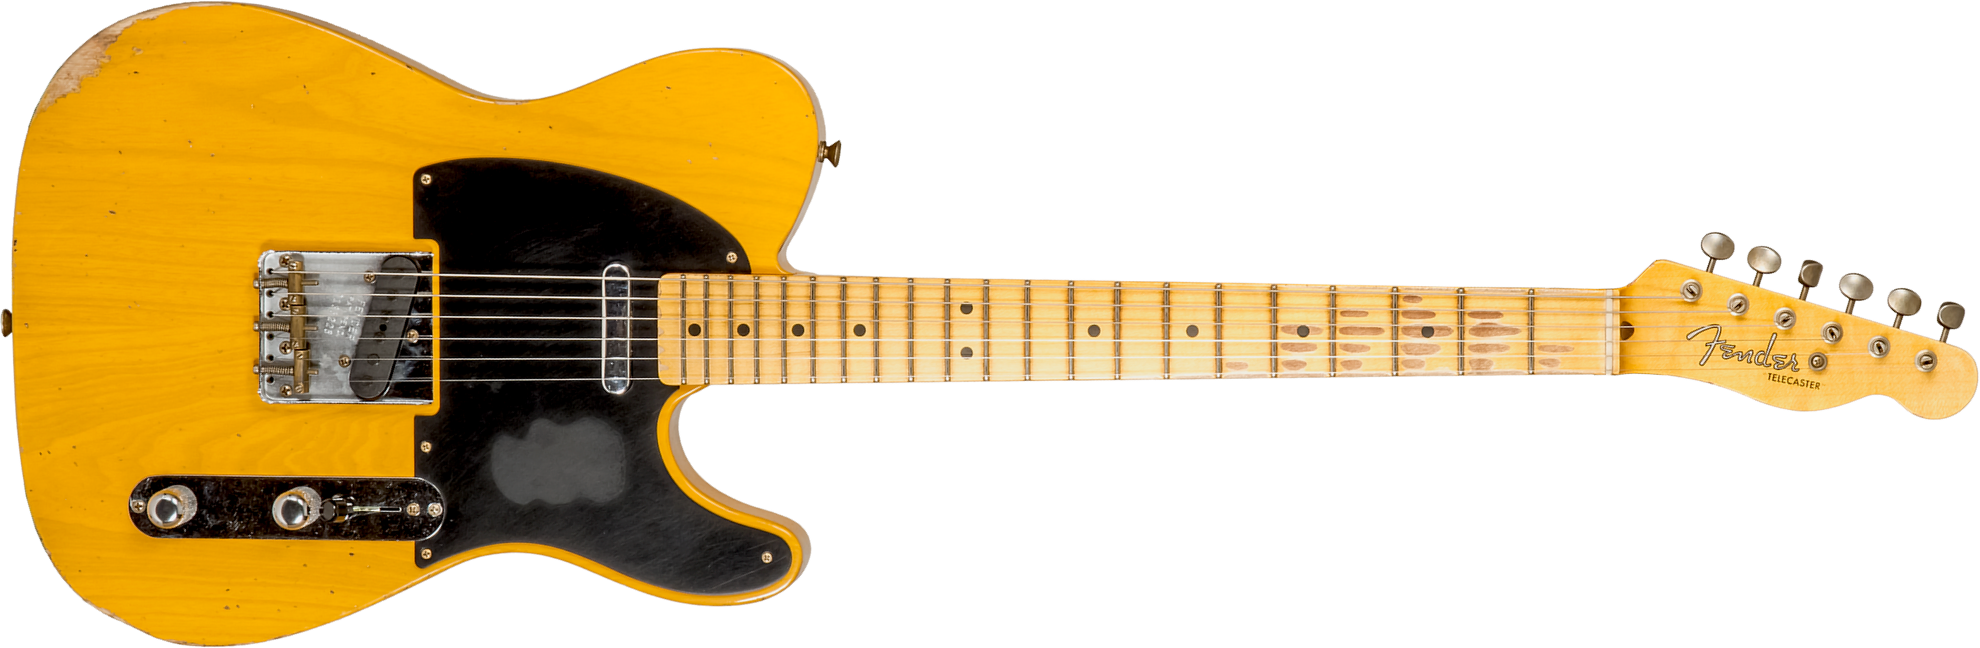 Fender Custom Shop Tele 1952 2s Ht Mn #r135225 - Relic Aged Buttercotch Blonde - Tel shape electric guitar - Main picture